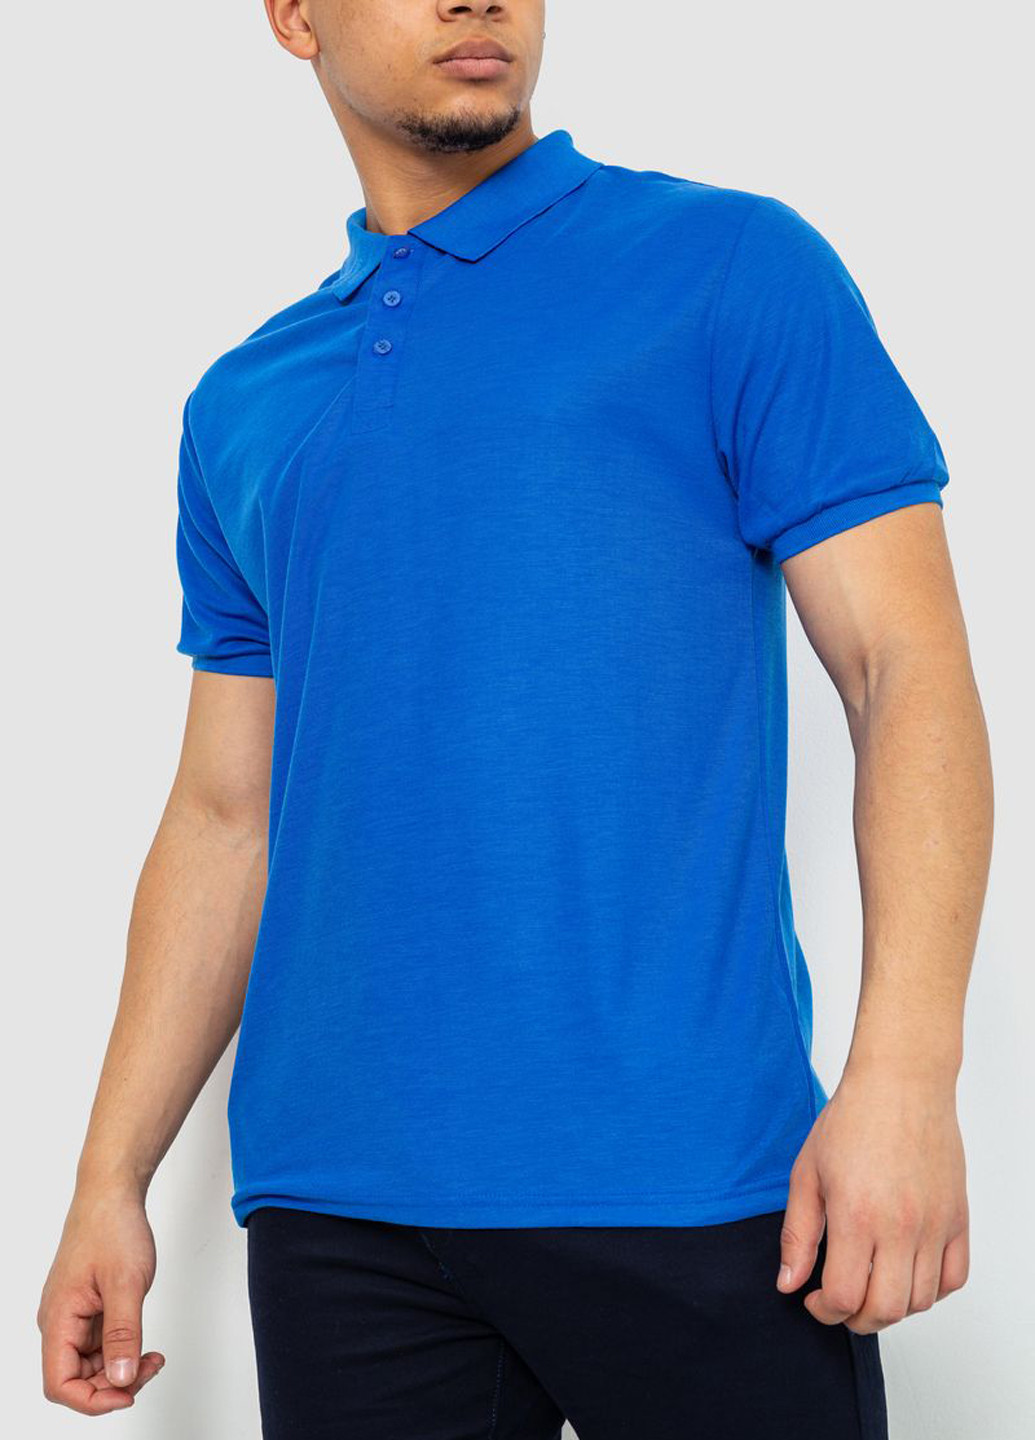 Индиго футболка-поло для мужчин Ager однотонная